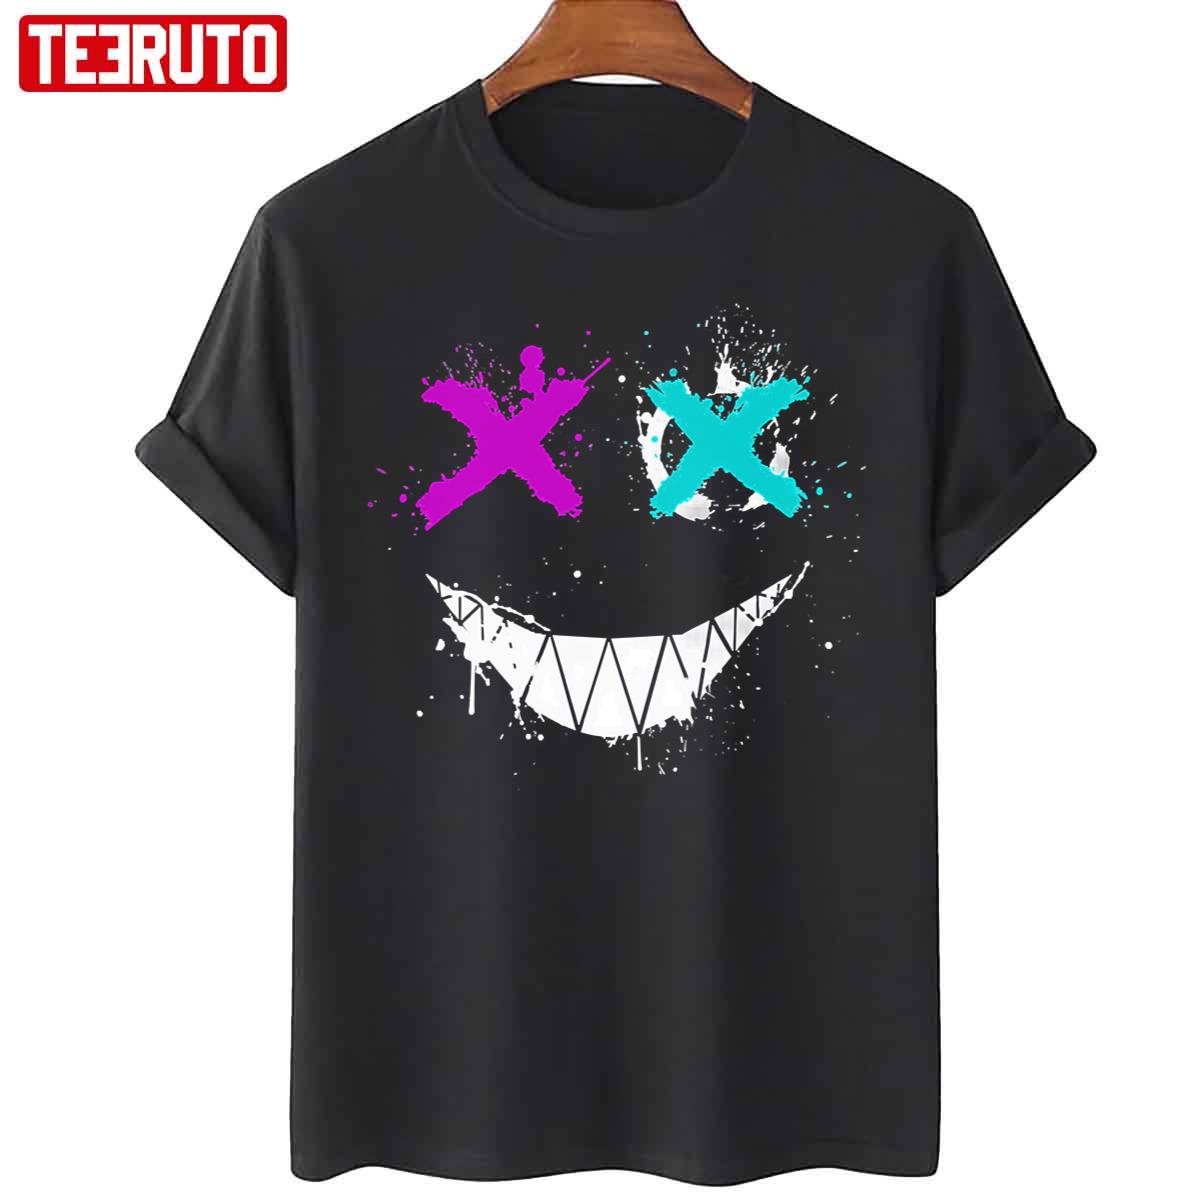 Arcane Jinx Get Jinxed Smiling Face Unisex T-Shirt - Teeruto